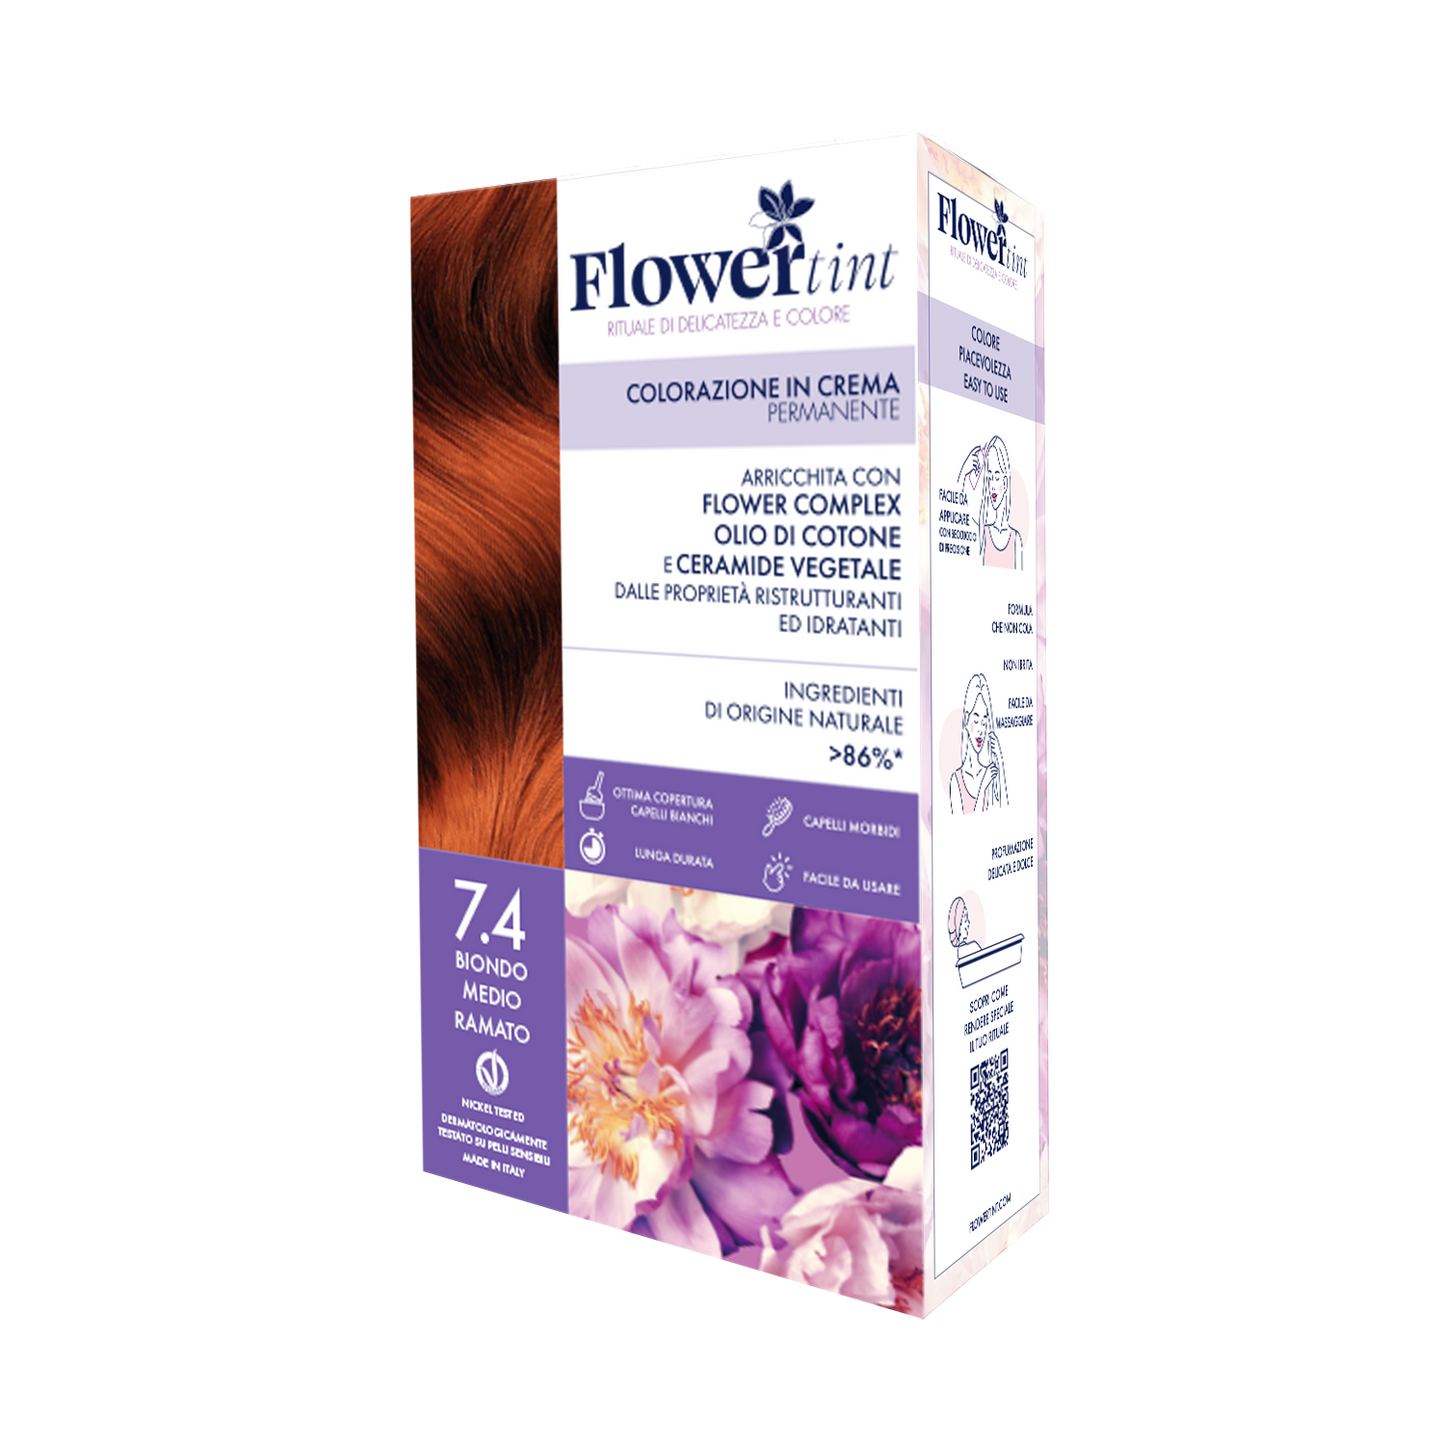 Flower Tint Tintura in crema 7.4 Biondo Medio Ramato